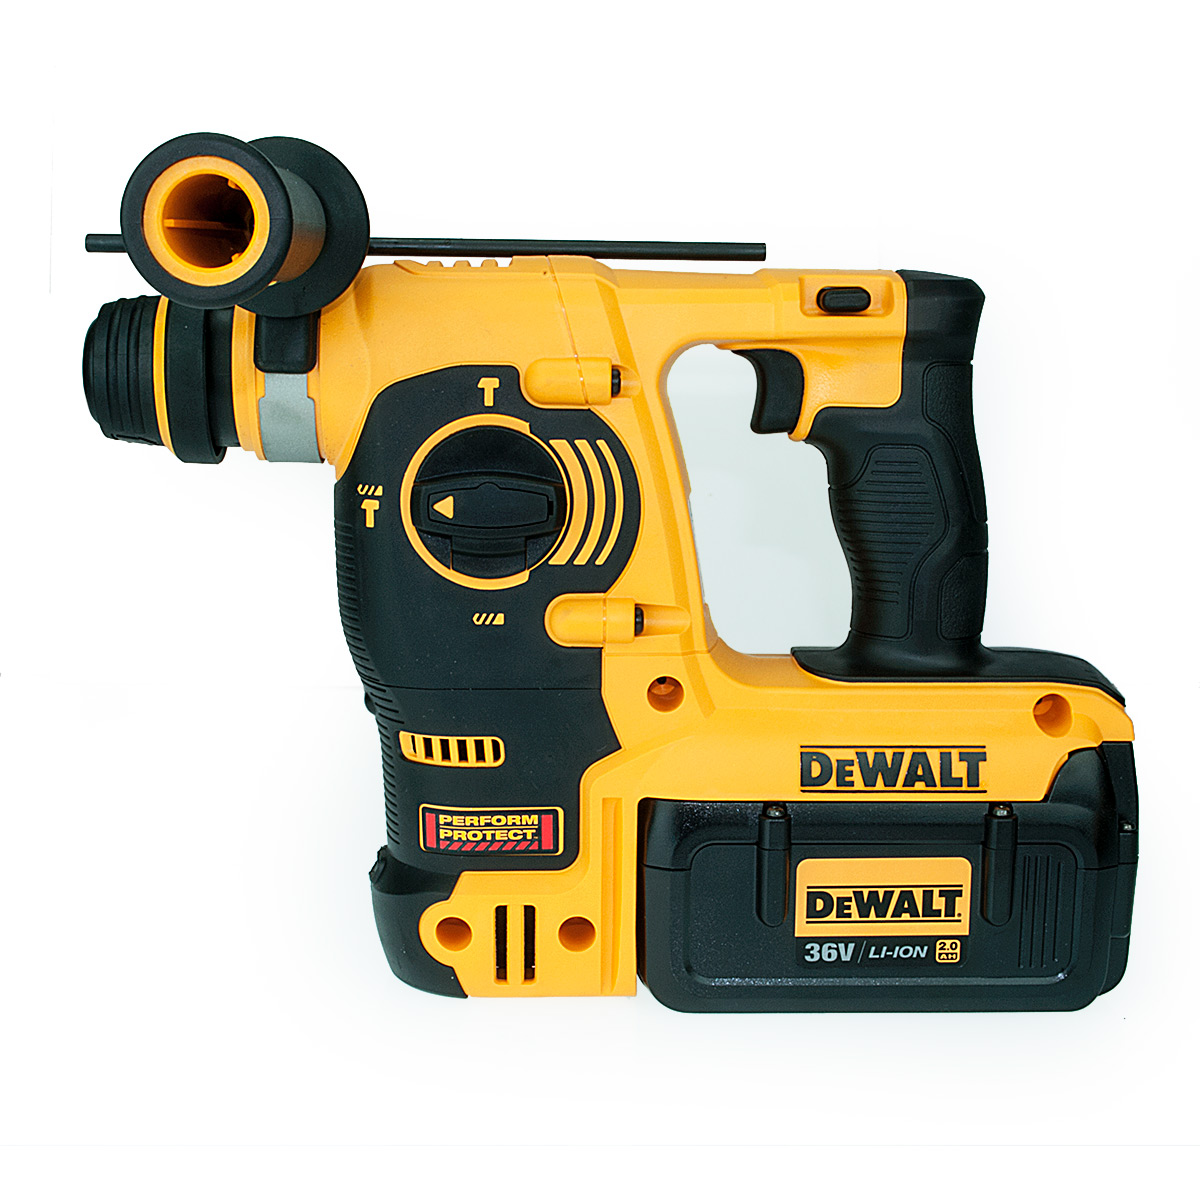 DeWalt Cordless Drill 36v Spares and Parts